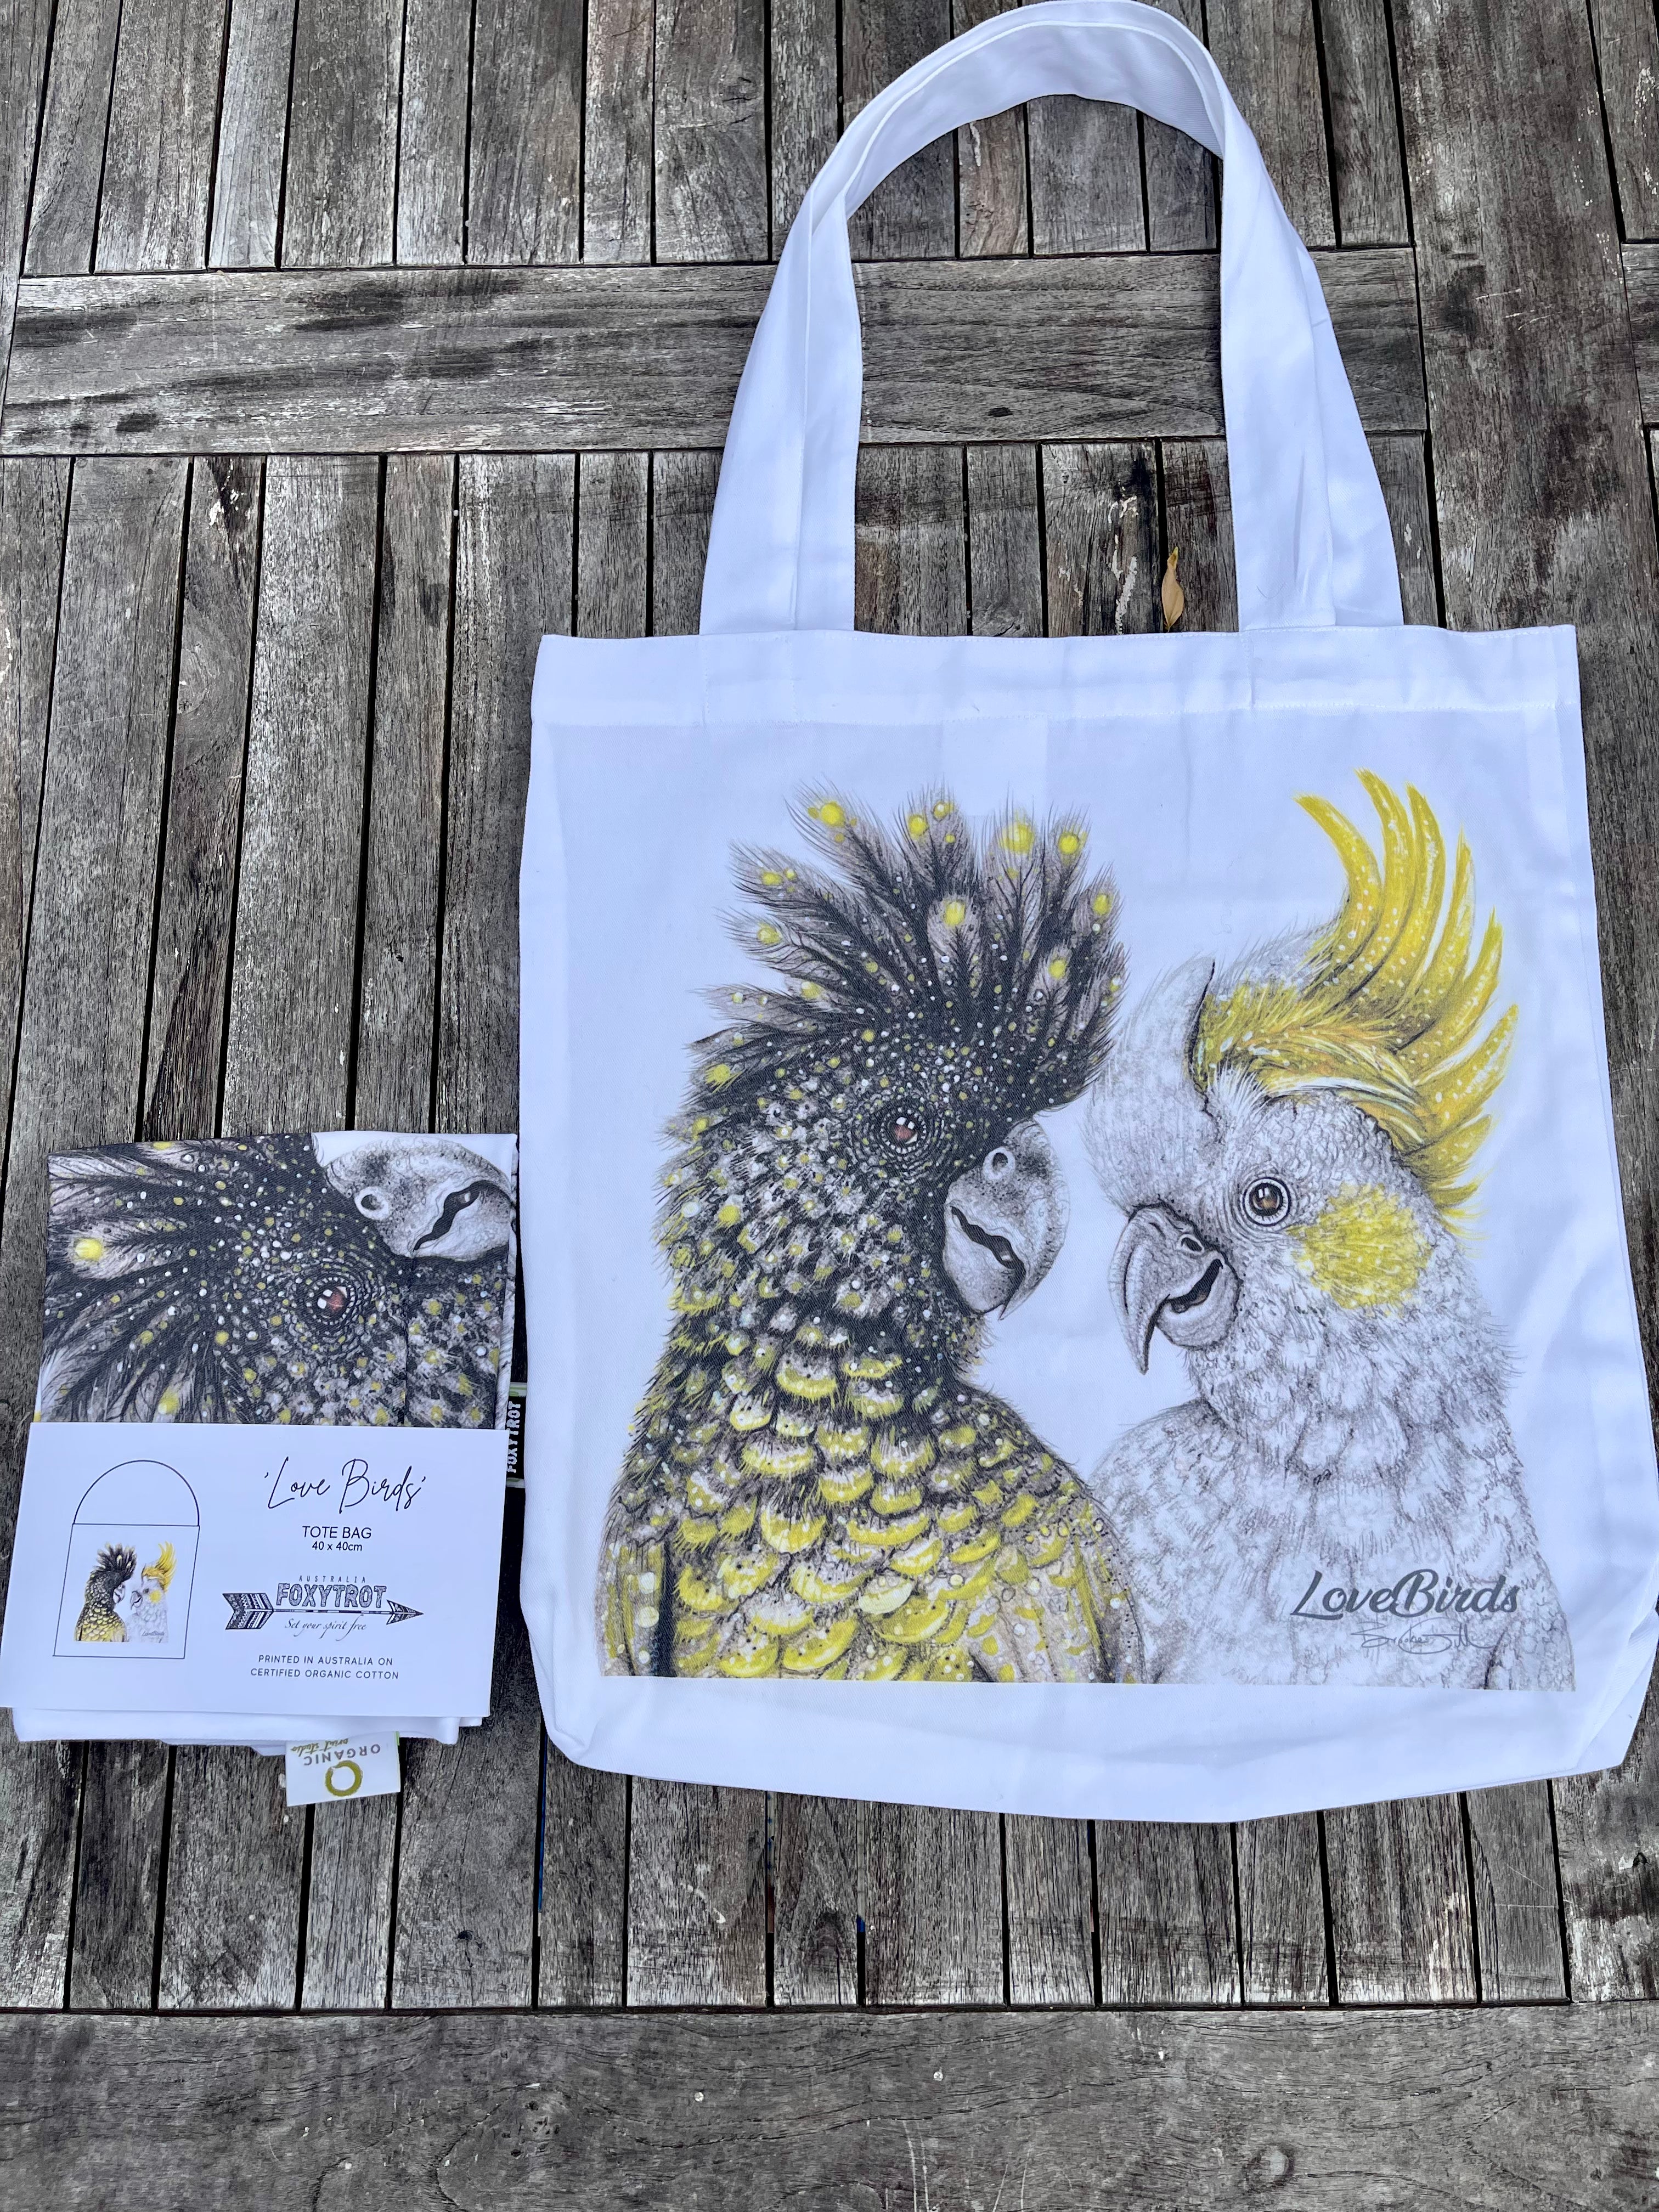 Cockatoo Love Birds Cotton Tote Bag